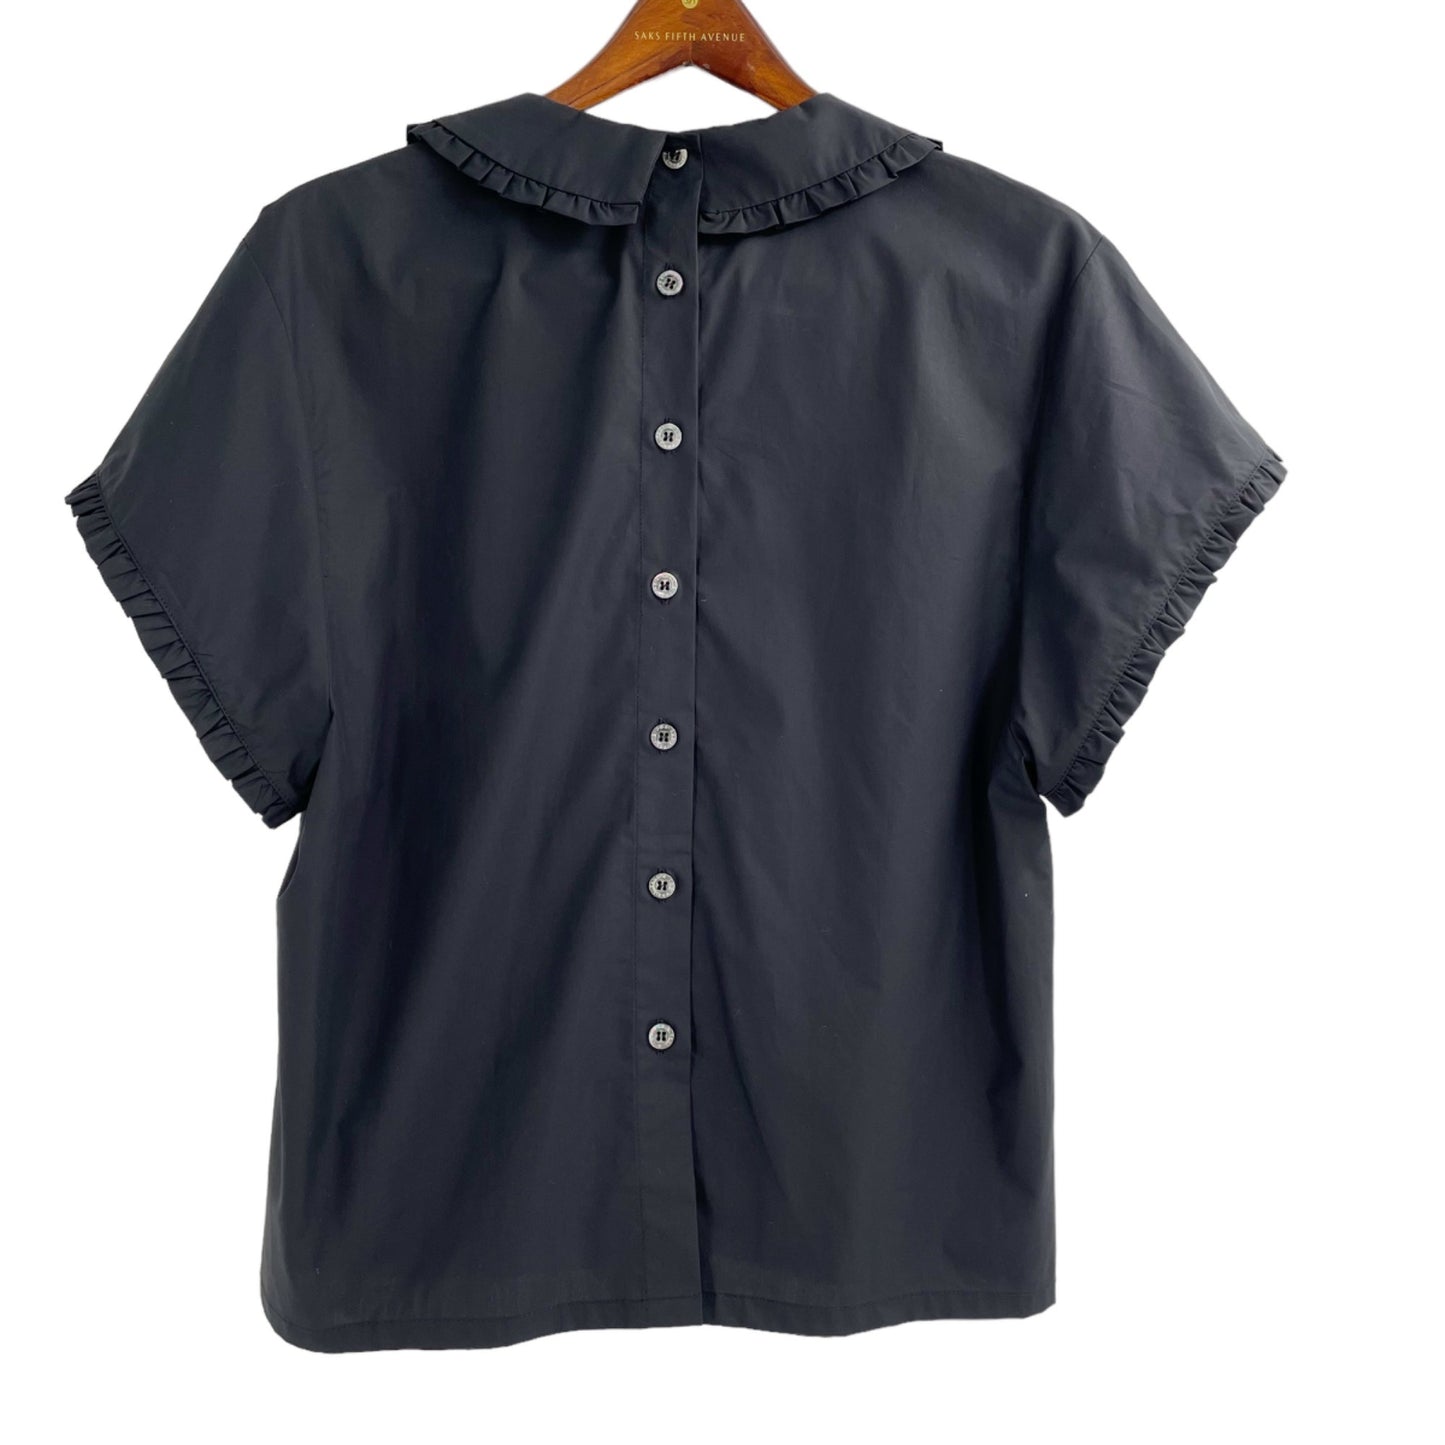 Paul & Joe Black Ruffle Trim Peter Pan Collar Button Up Shirt Womens Size 4